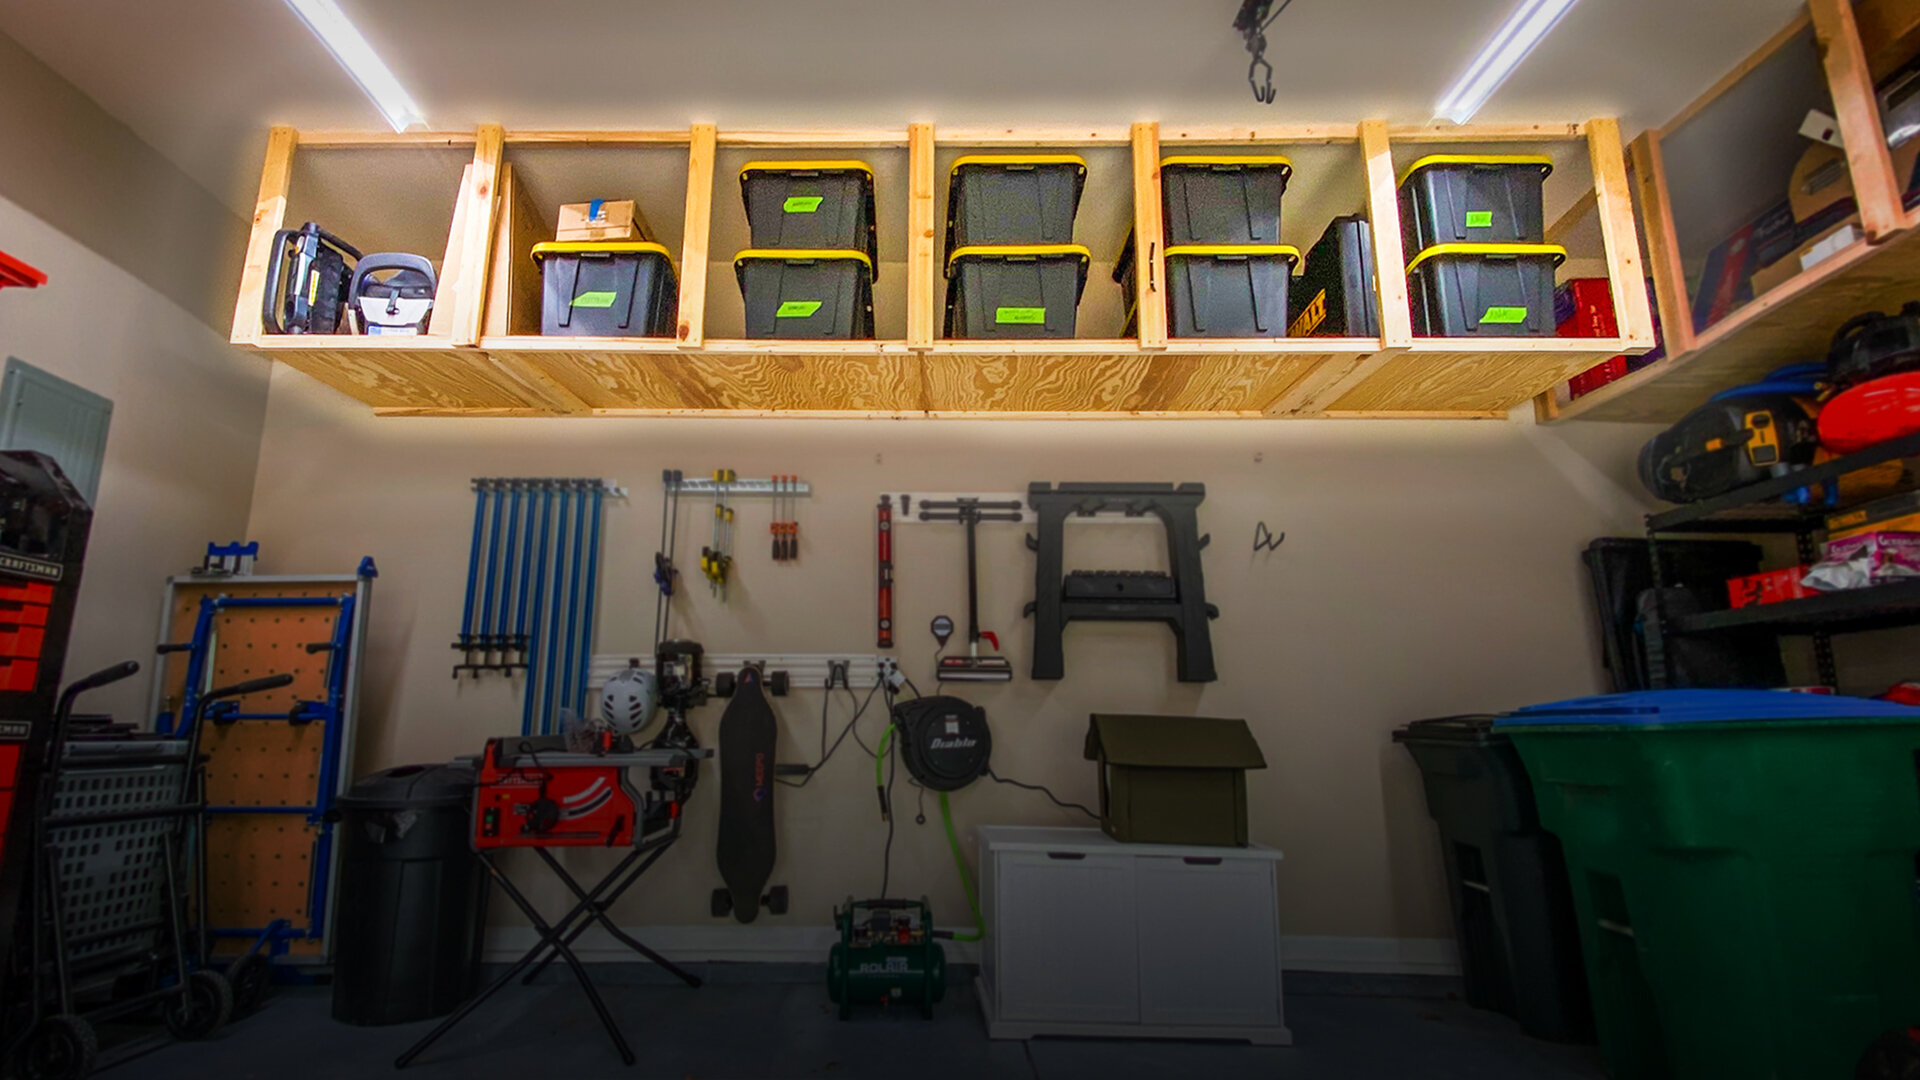 How To Build Diy Garage Storage Shelves, Do It Yourself Shelves For Garage